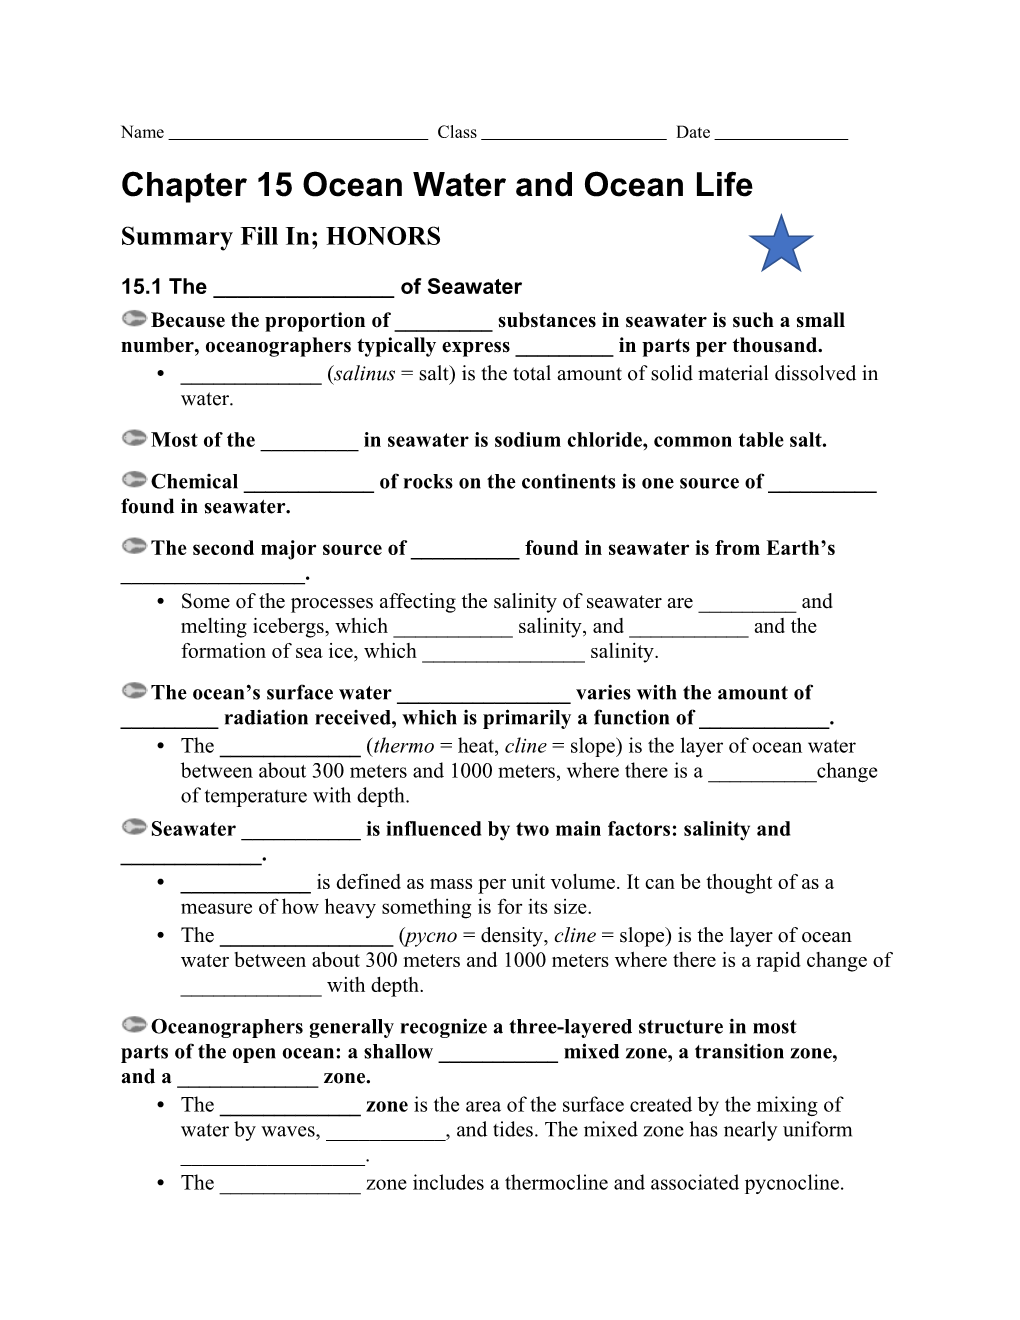 Chapter 15Ocean Water and Ocean Life